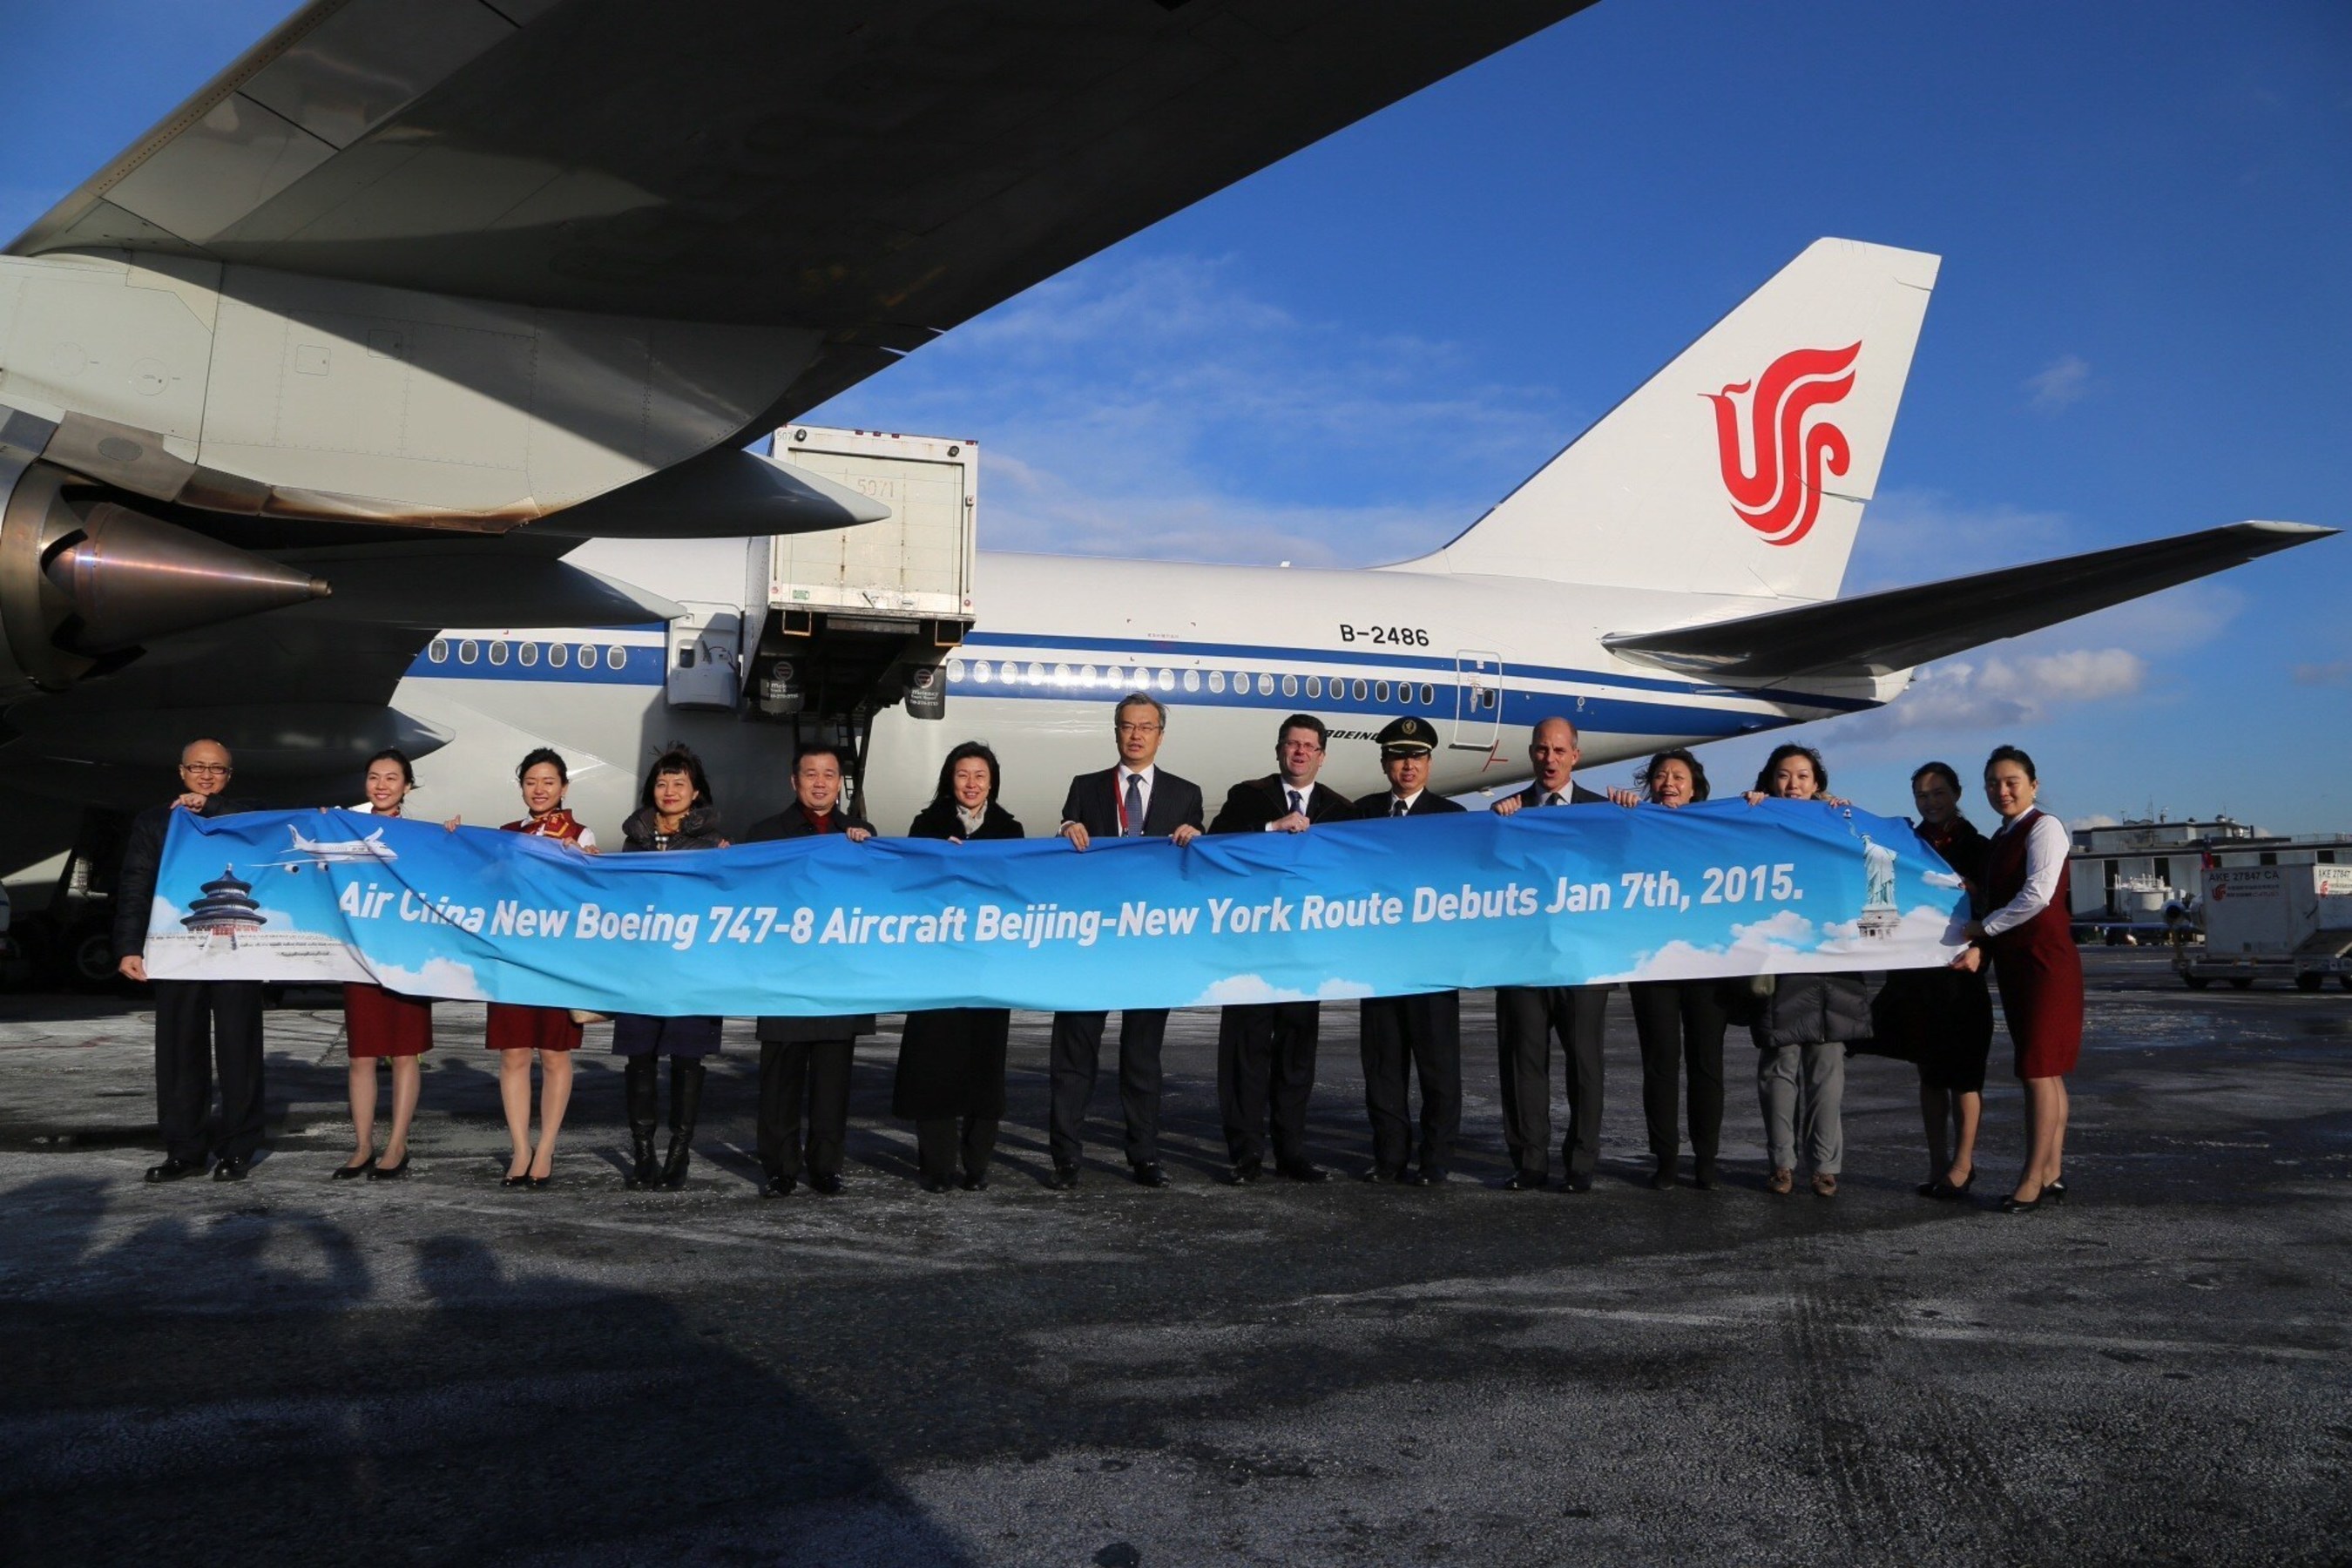 New York Welcomes Air China's New-Generation B747-8 Intercontinental